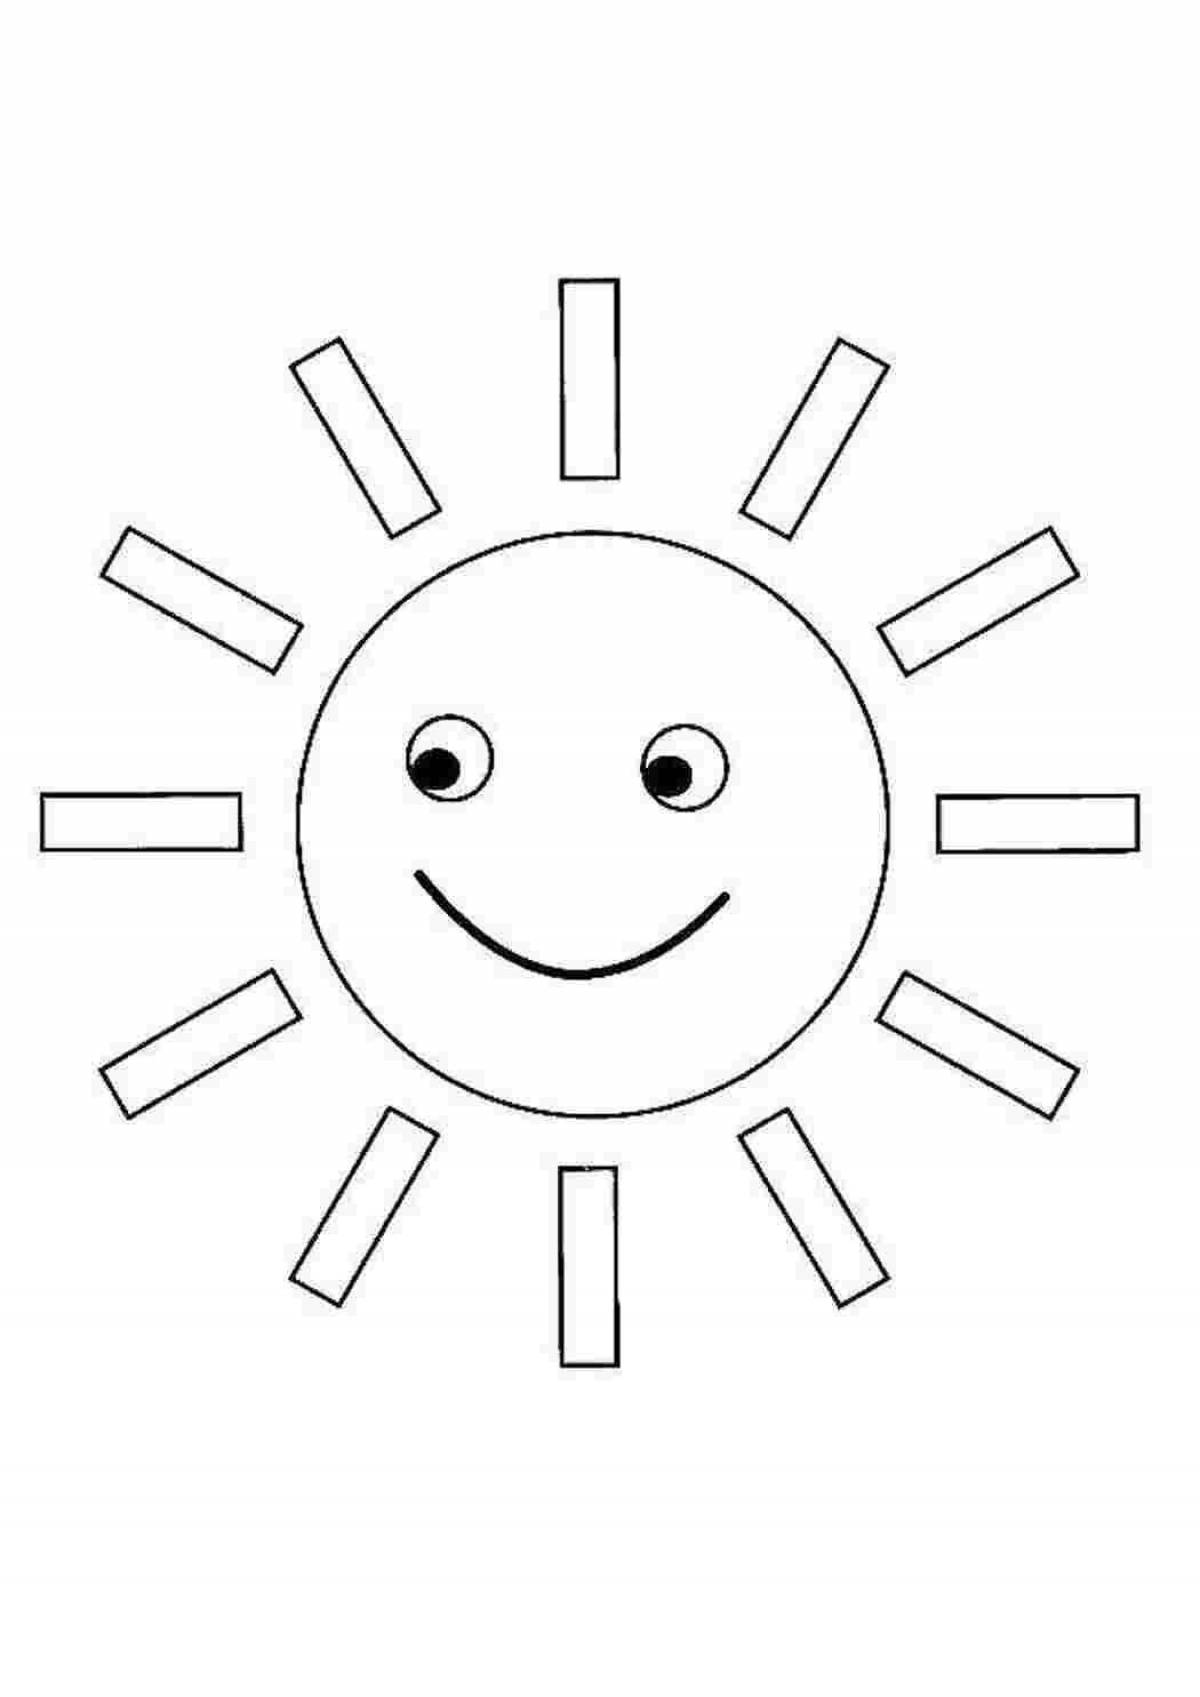 Раскраска fun sun pattern